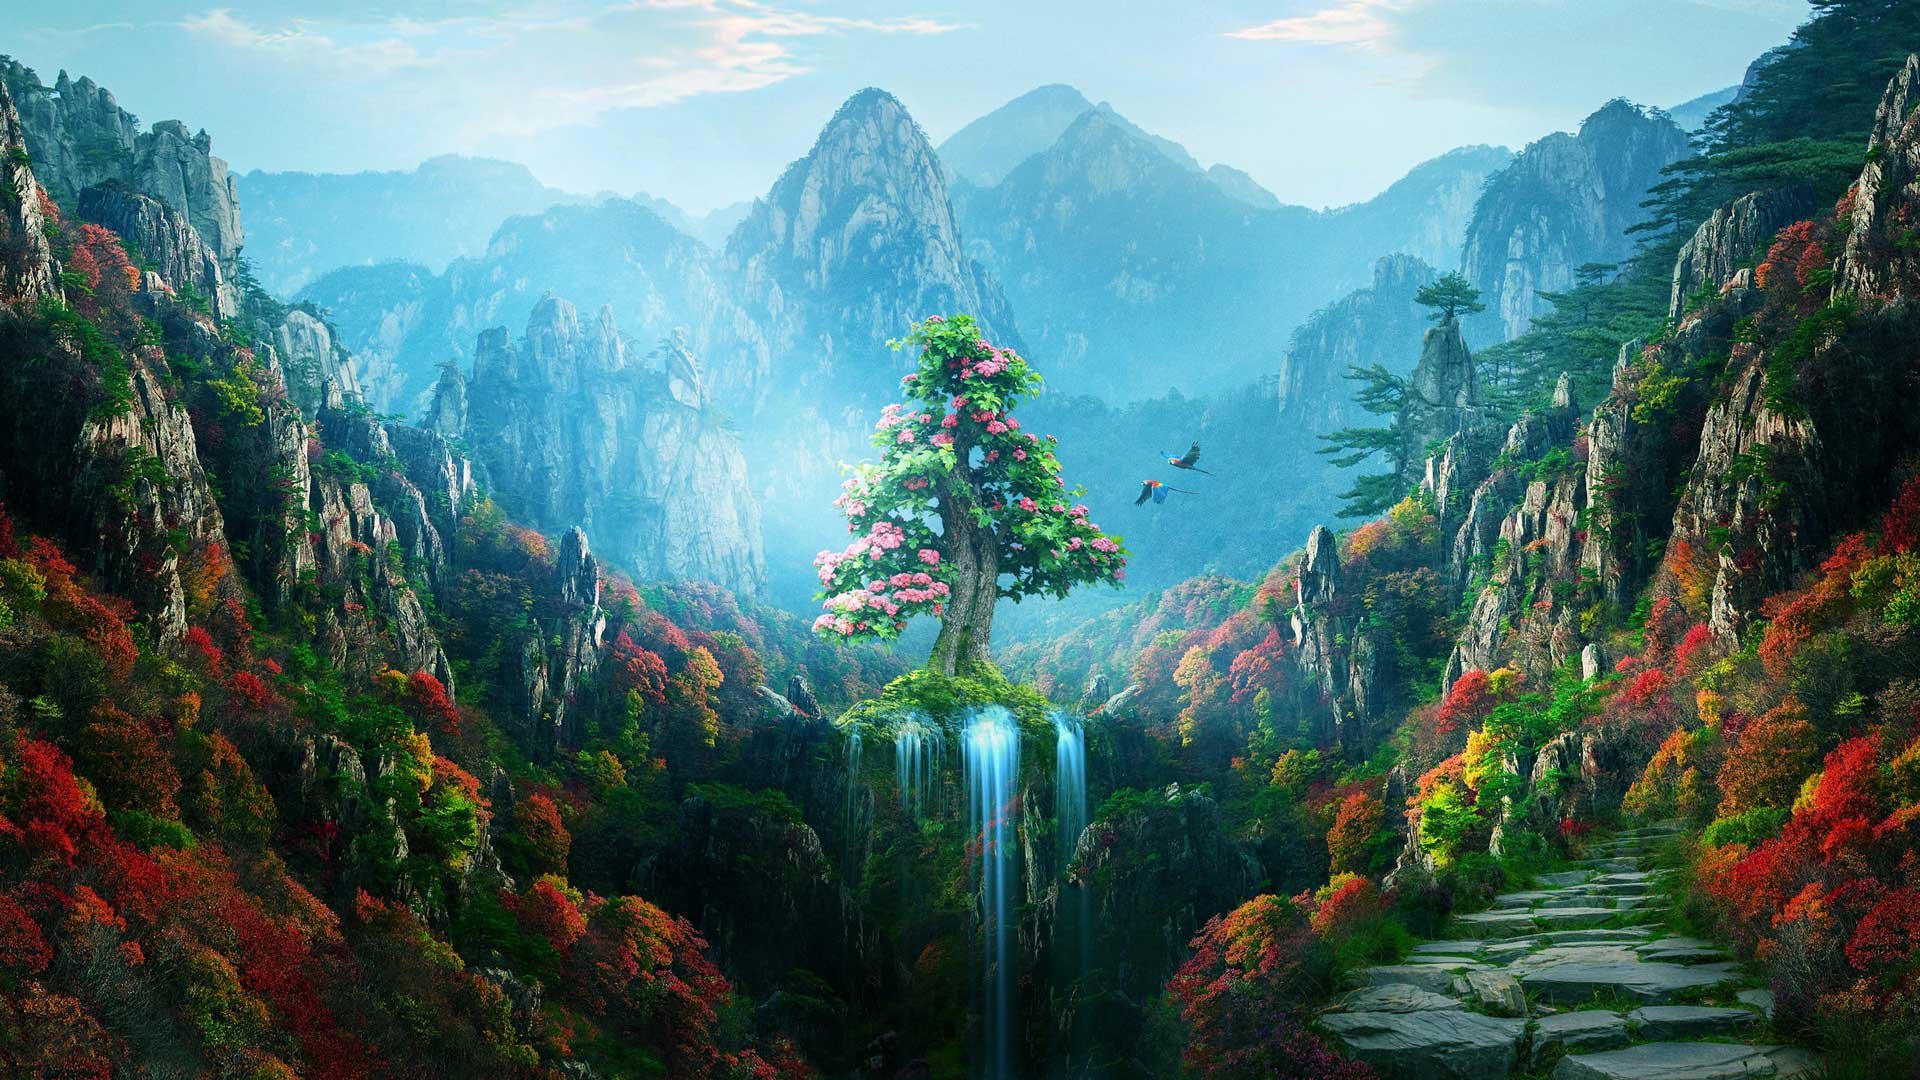 Avatar 3: Addressing Environmental Themes with Renewed Urgency